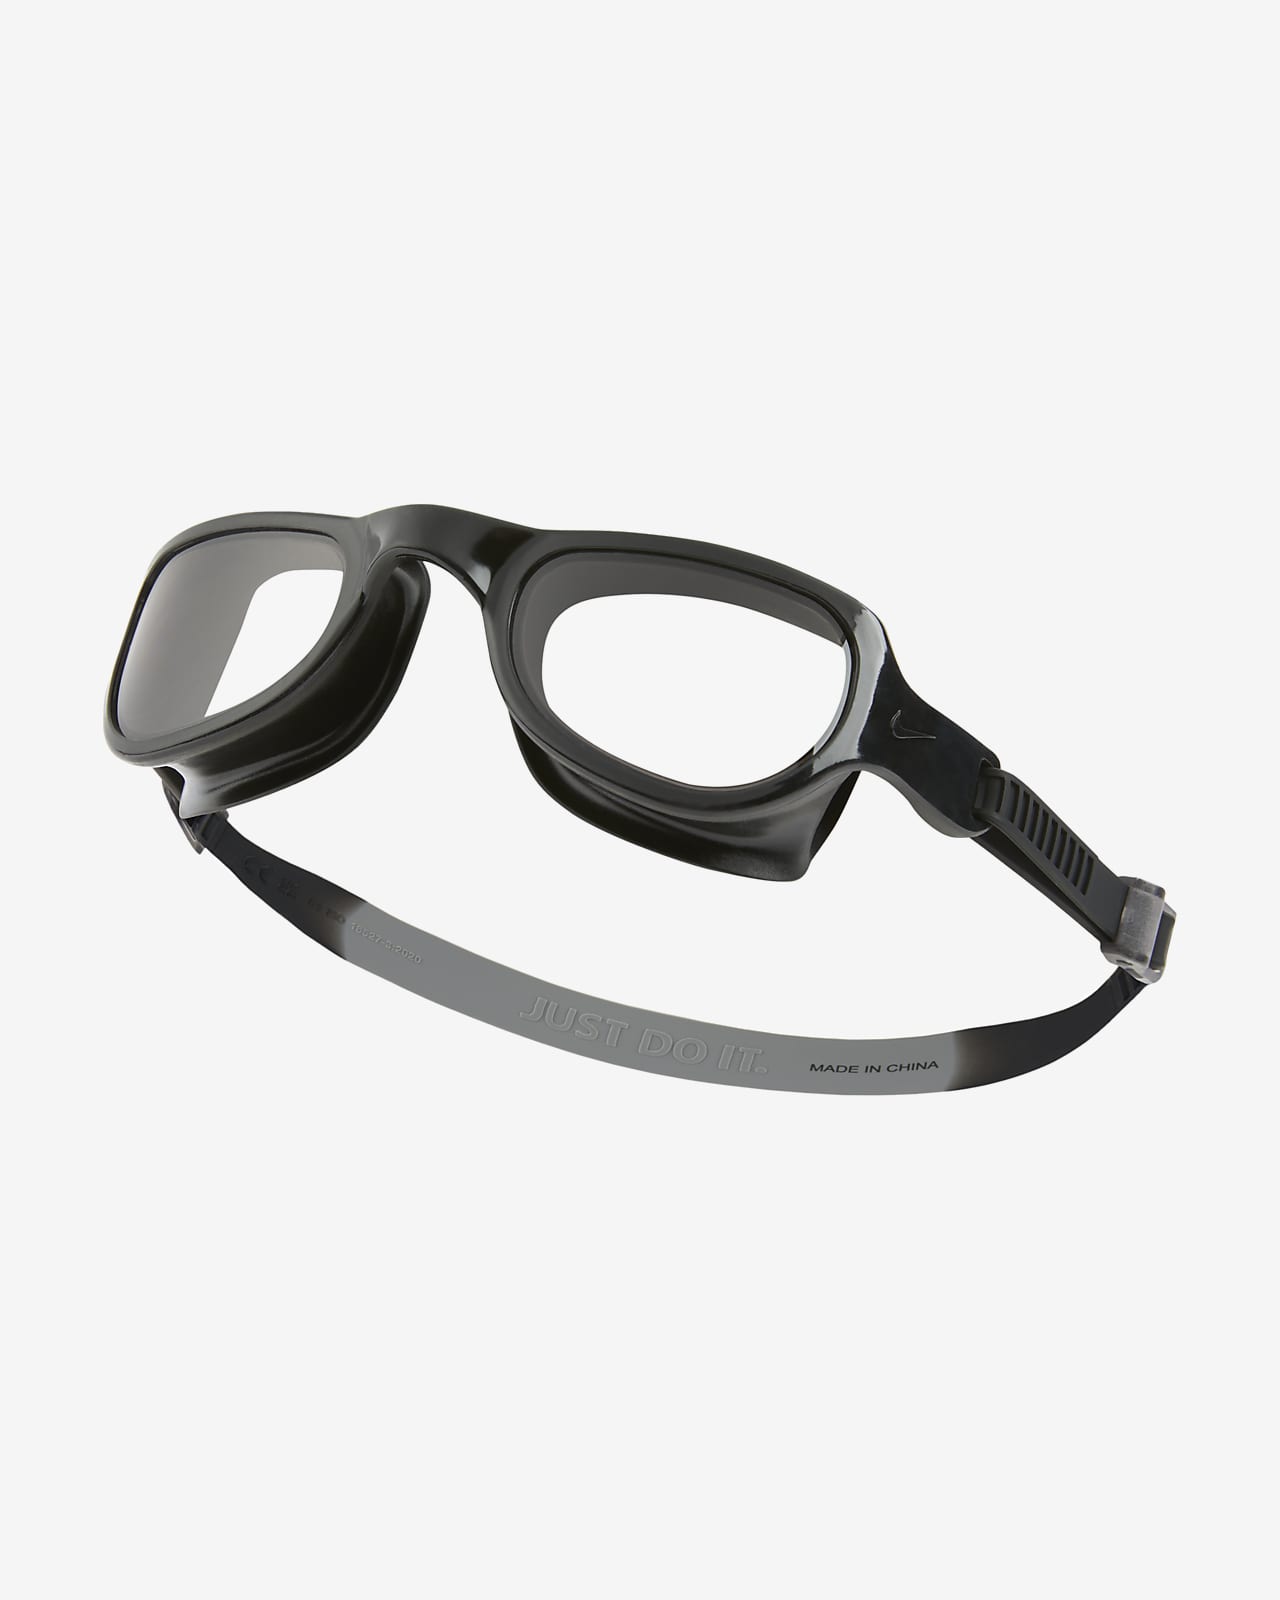 Nike Swim Universal Fit Goggles